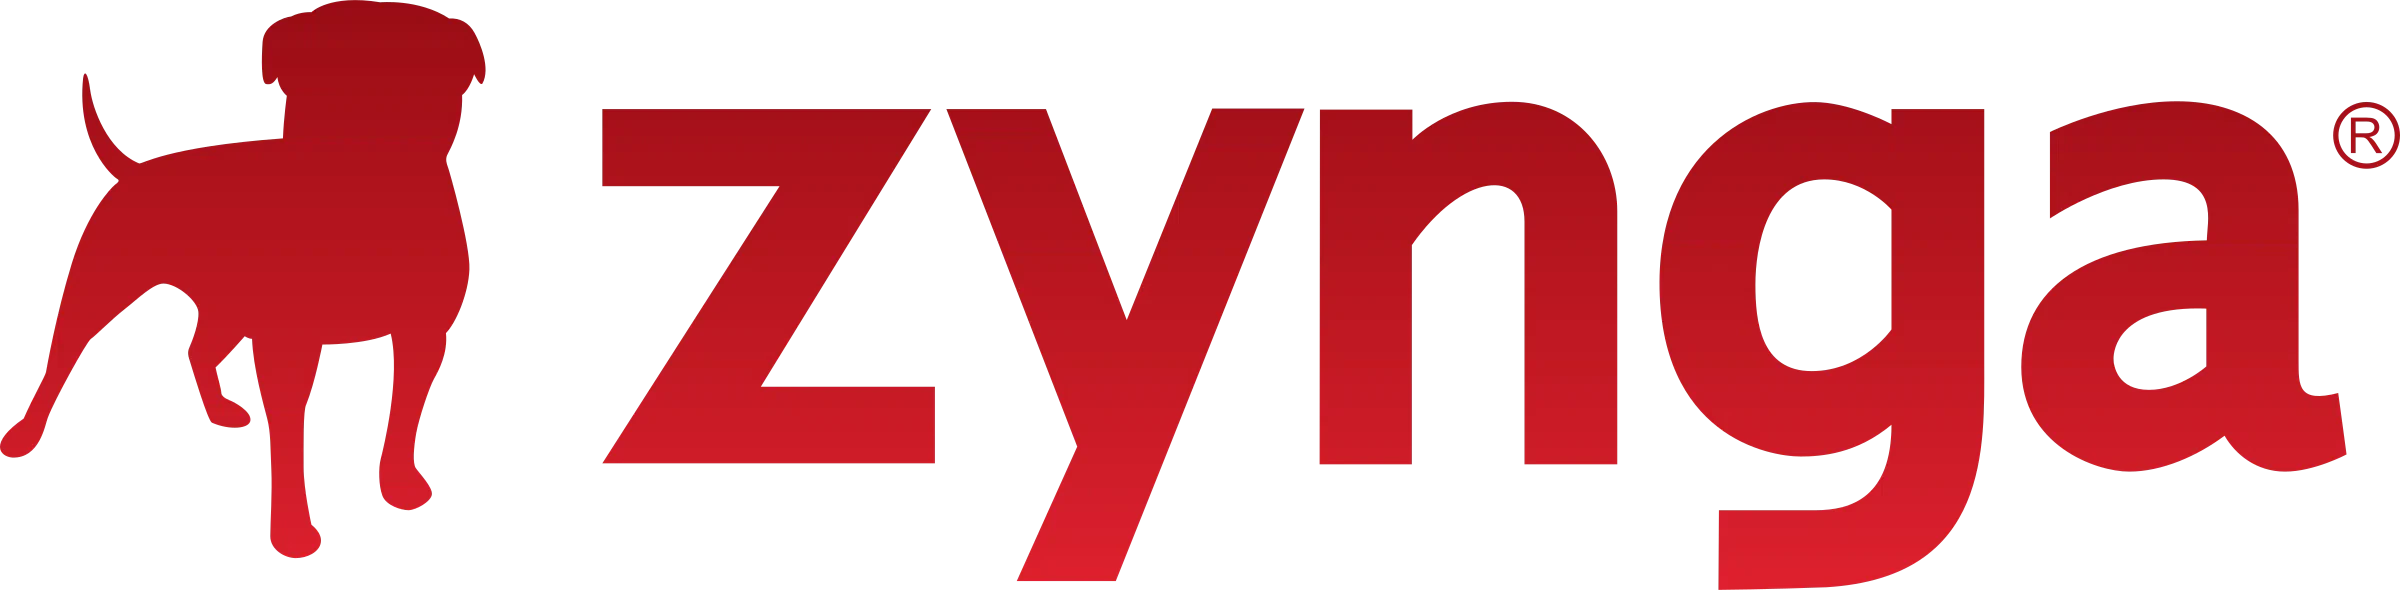 logo de l’entreprise gaming zynga